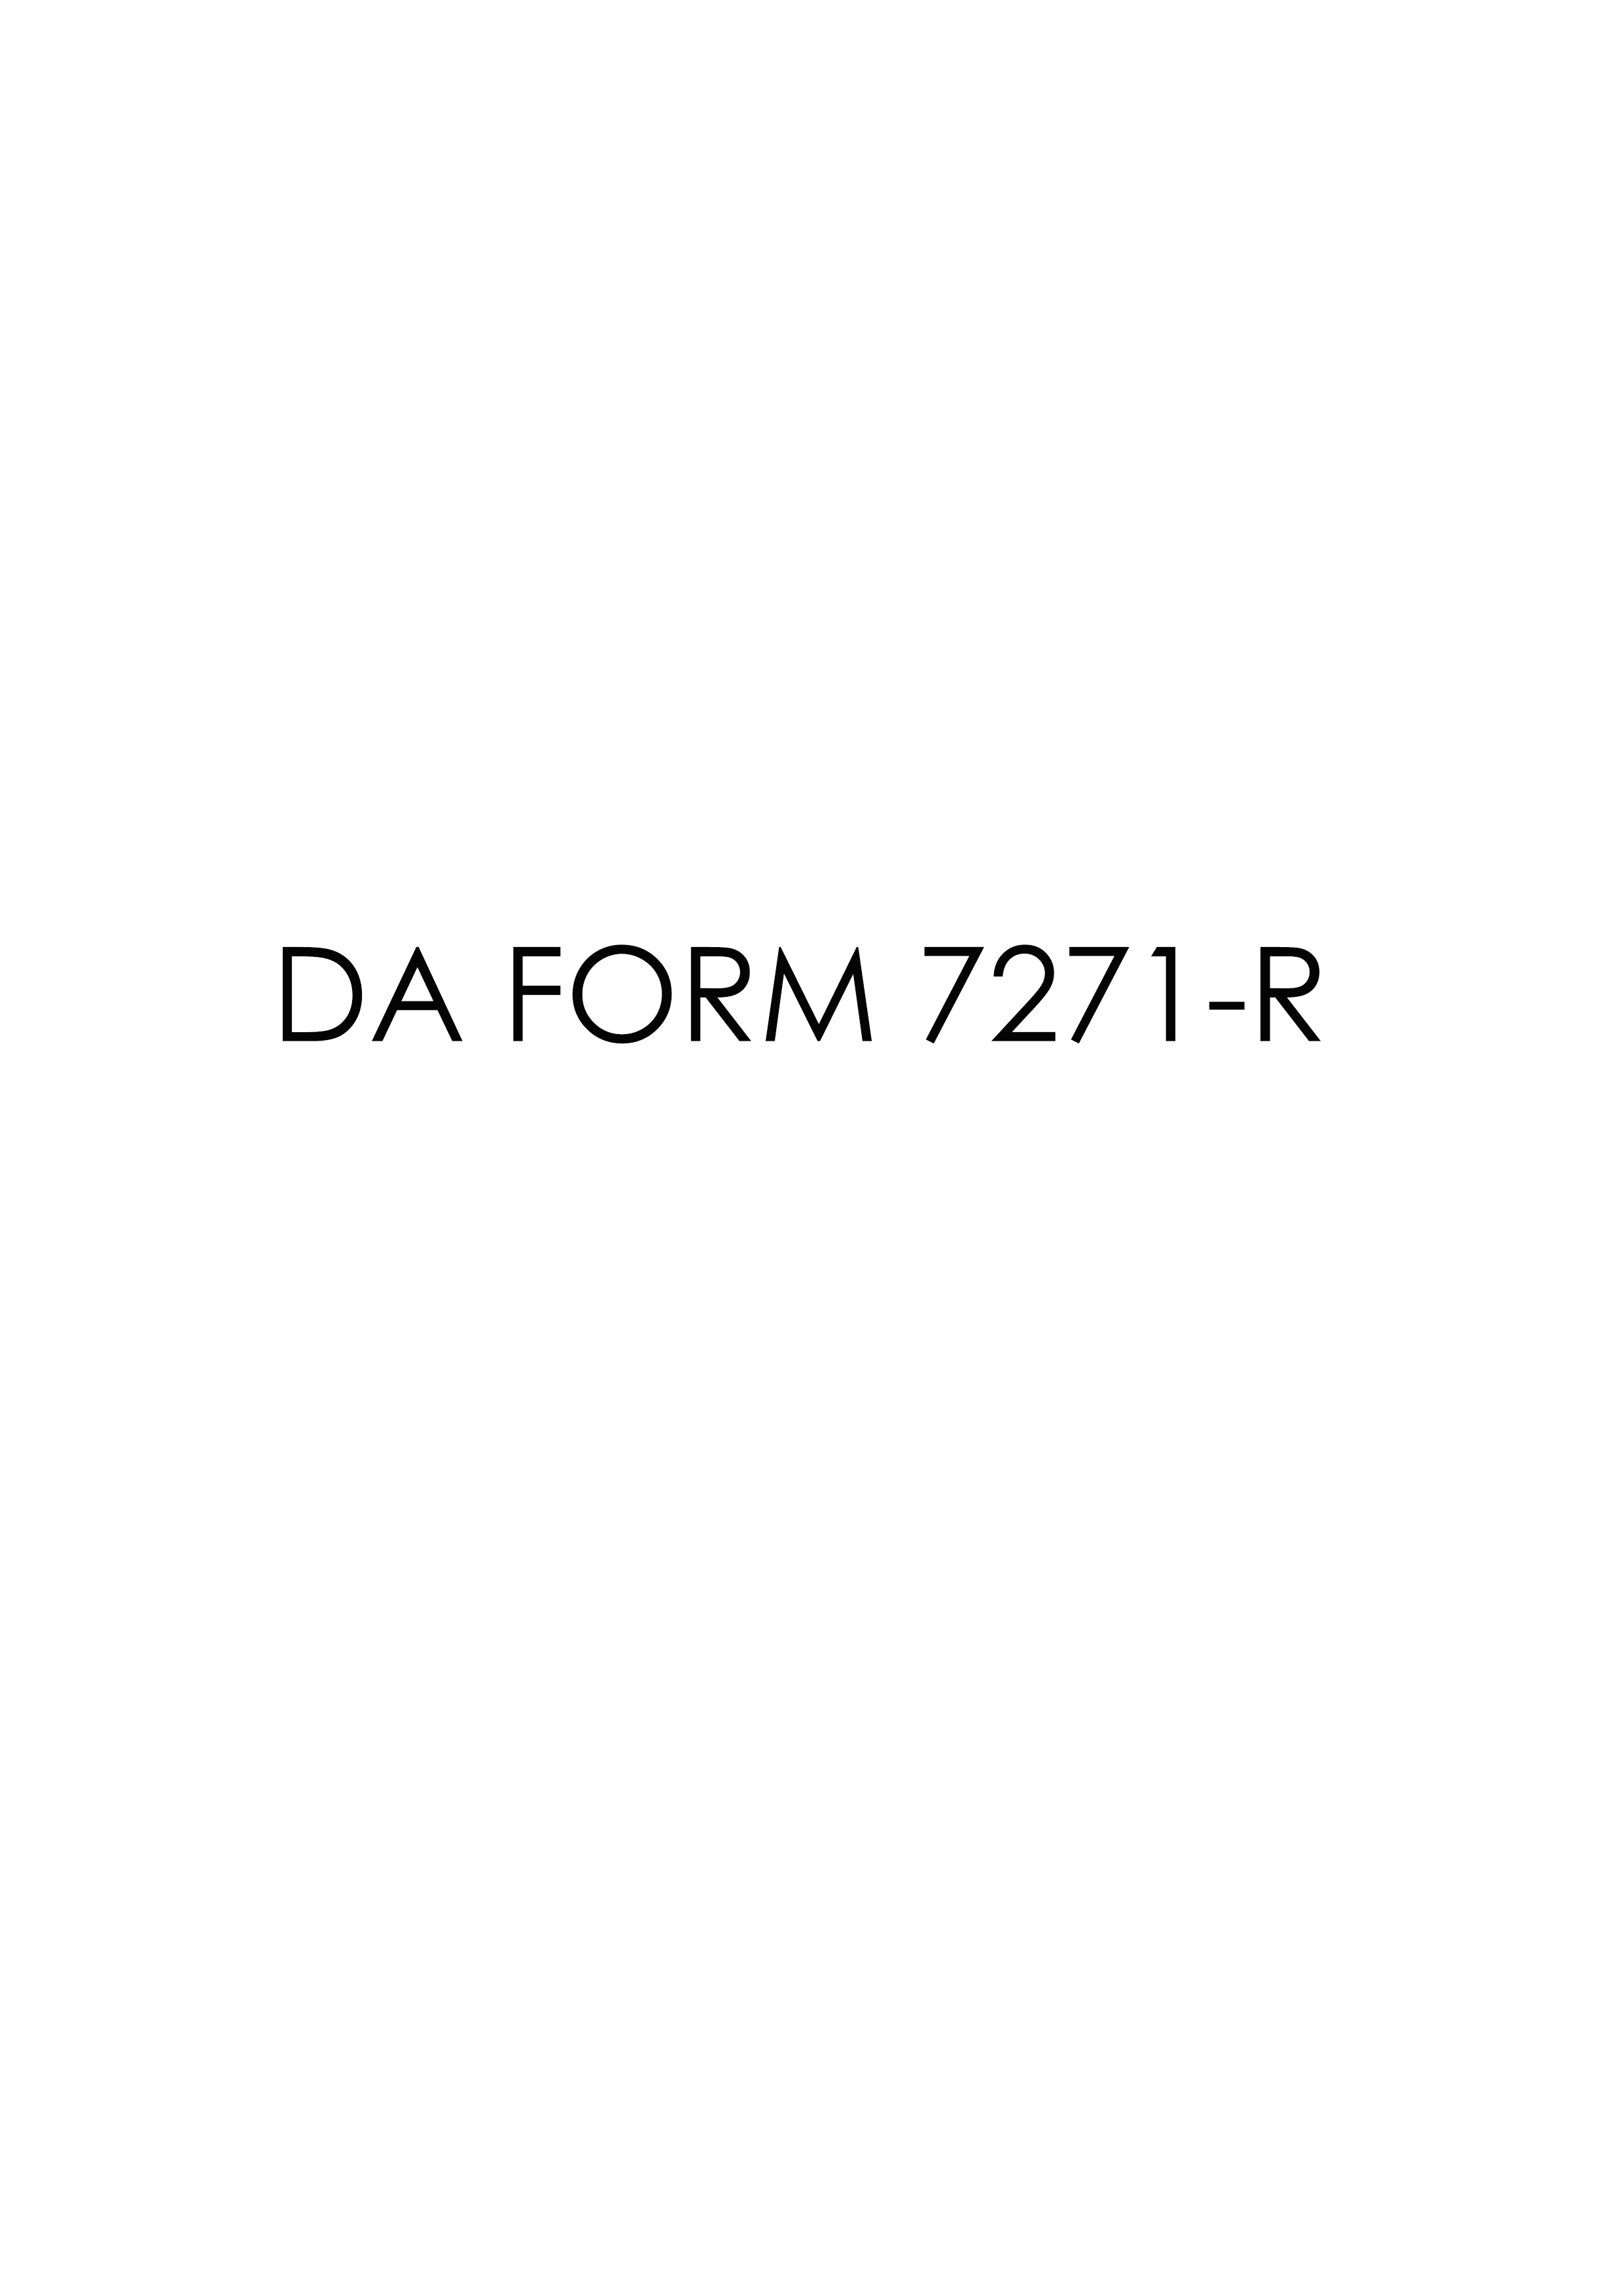 da Form 7271-R fillable